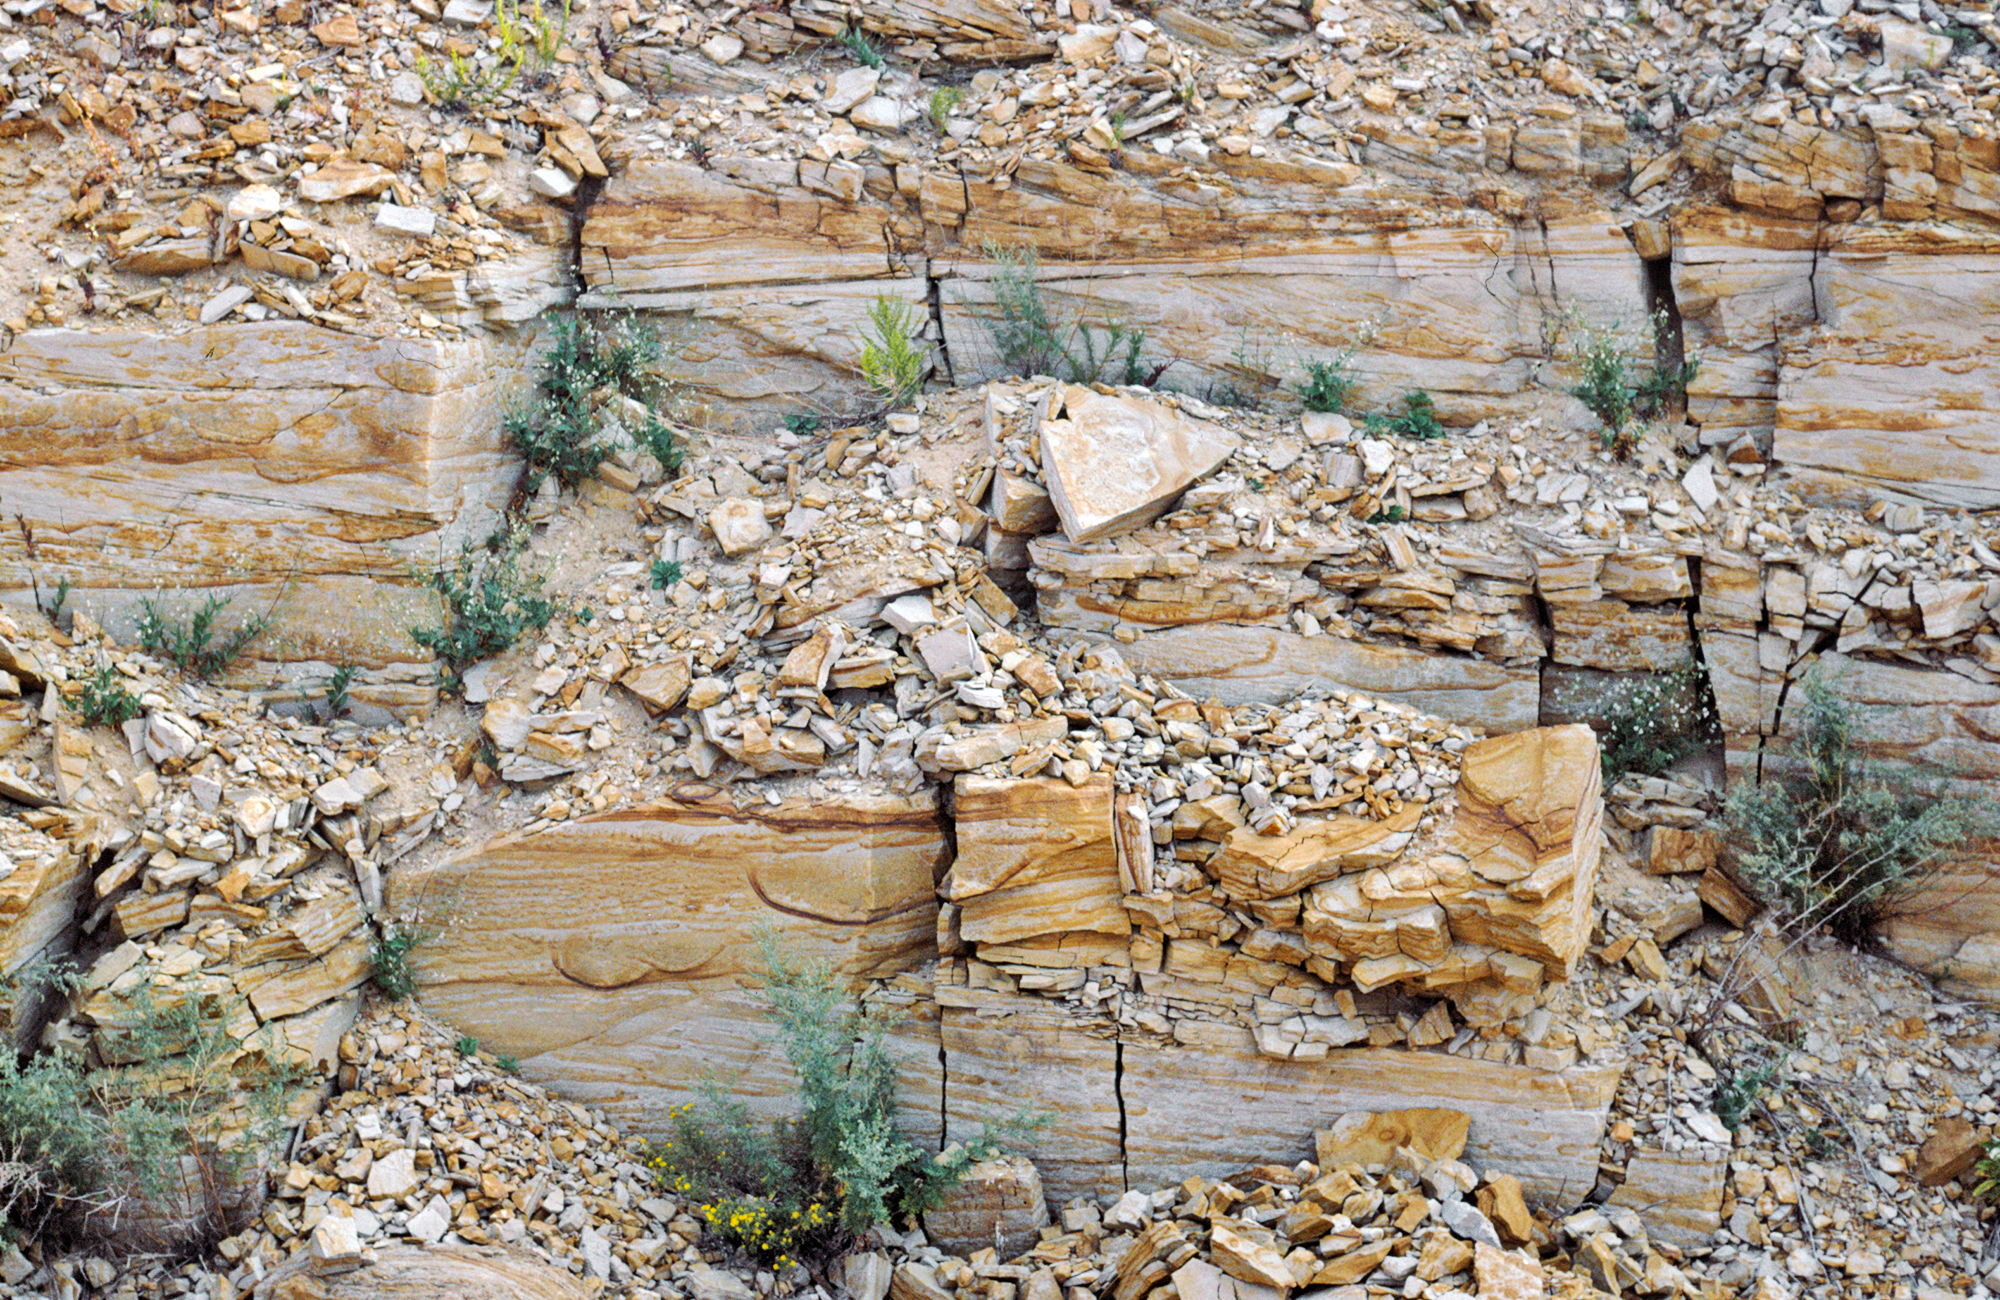 Layers of rocks with reddish-brown streaks.